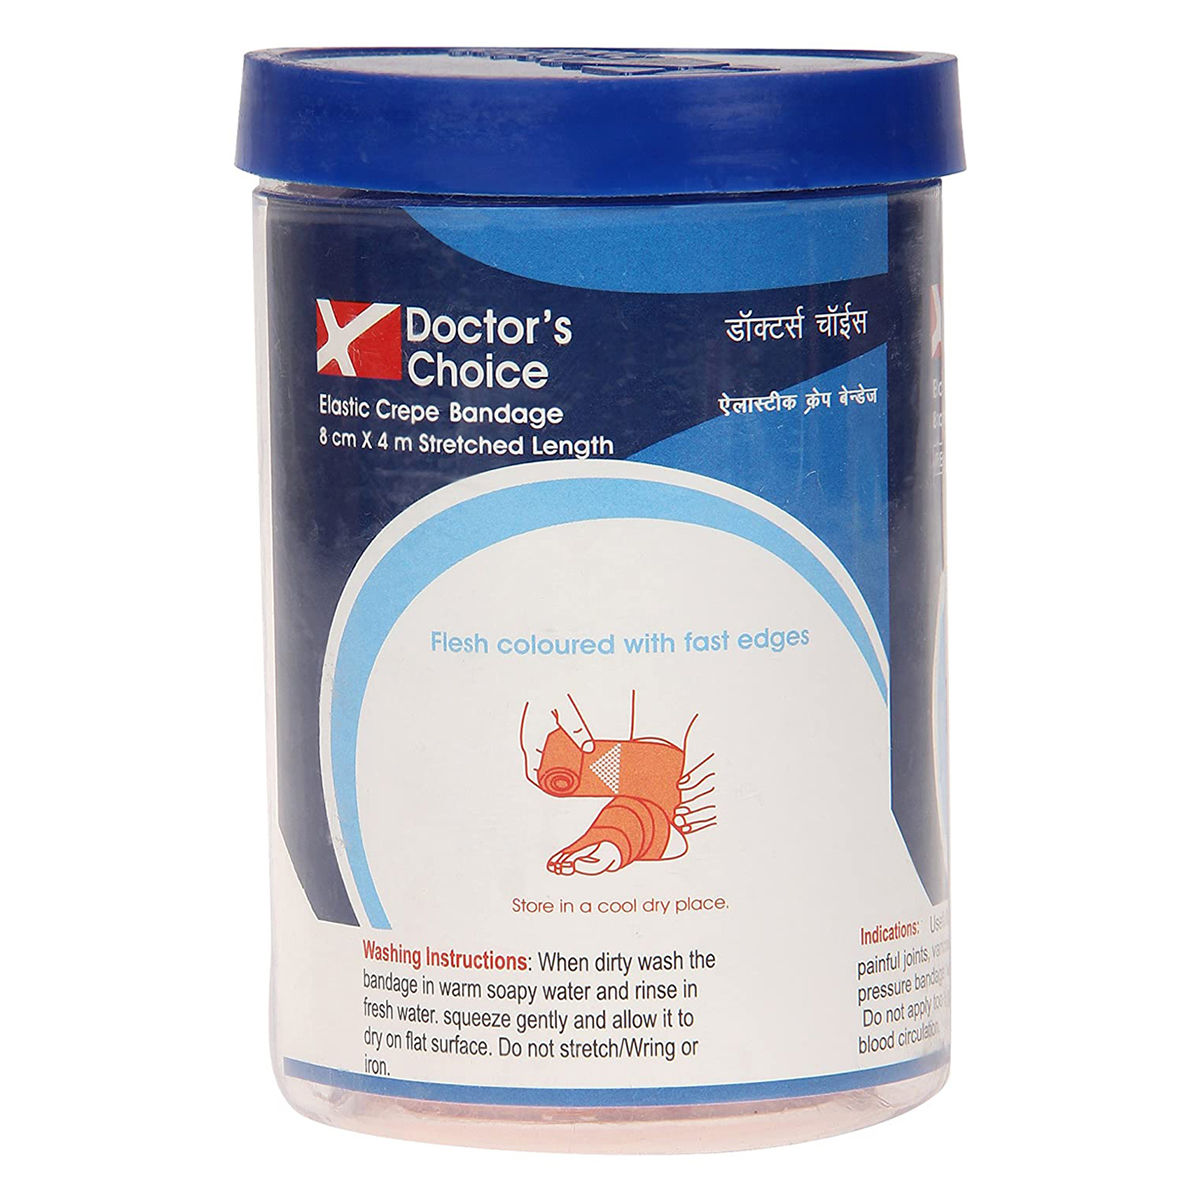 Buy Doctor's Choice Elastic Crepe Bandage 8 cm x 4 m, 1 Count Online